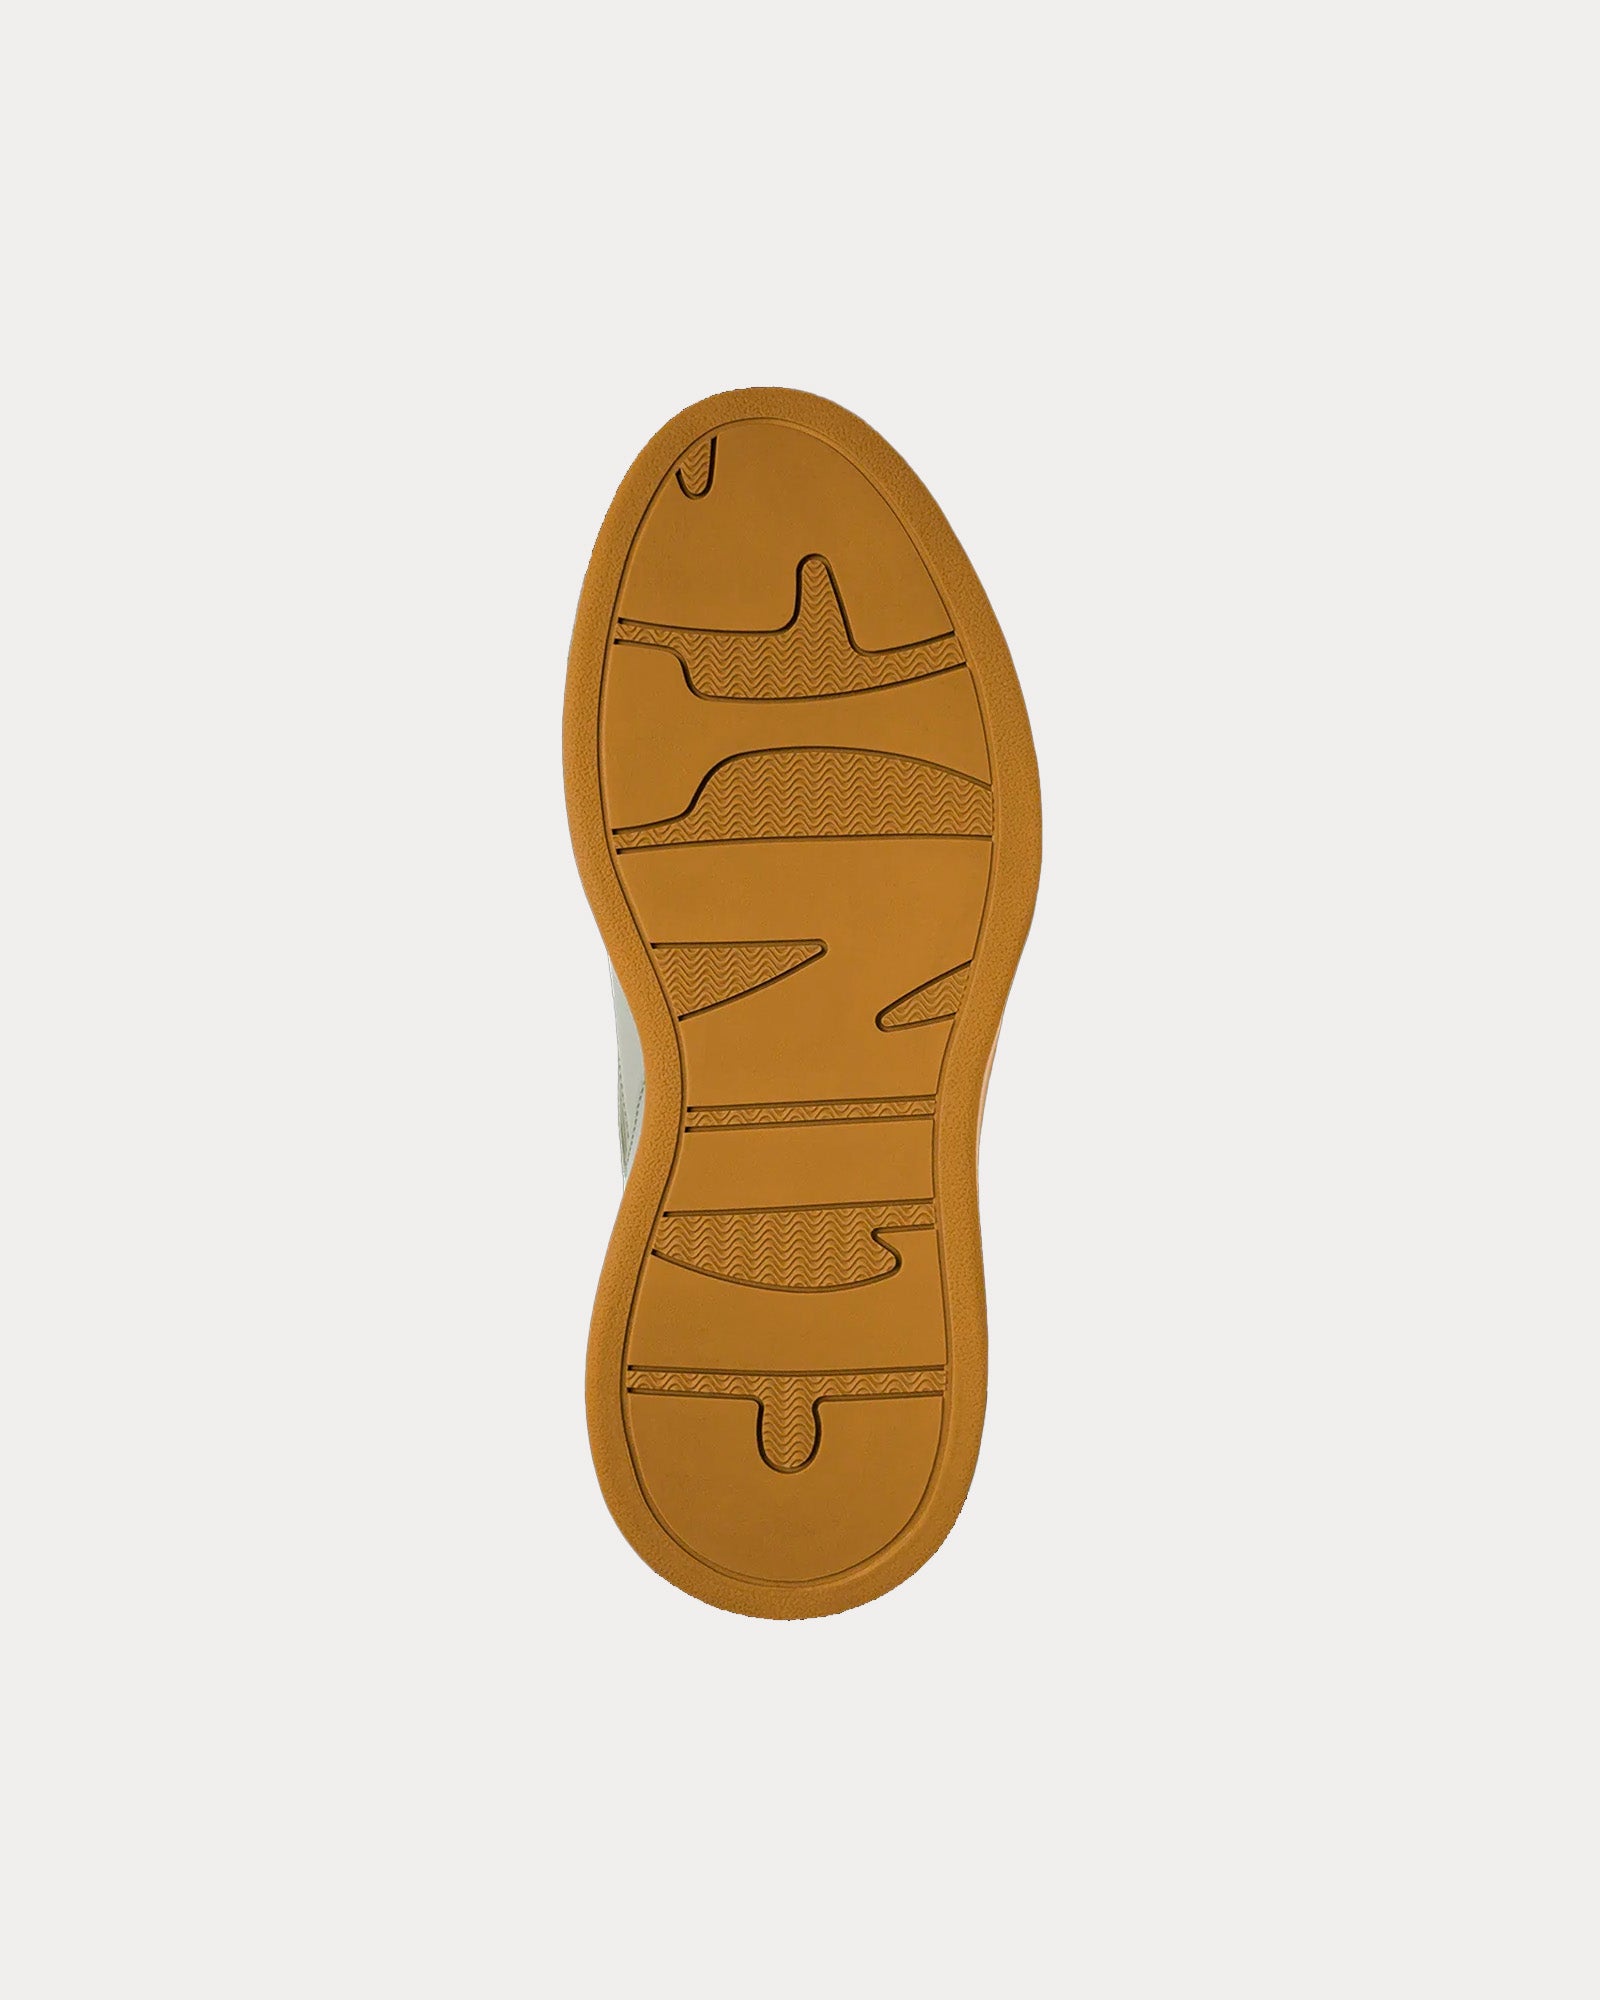 Clints Inc - Kita 'Oats' Low Top Sneakers